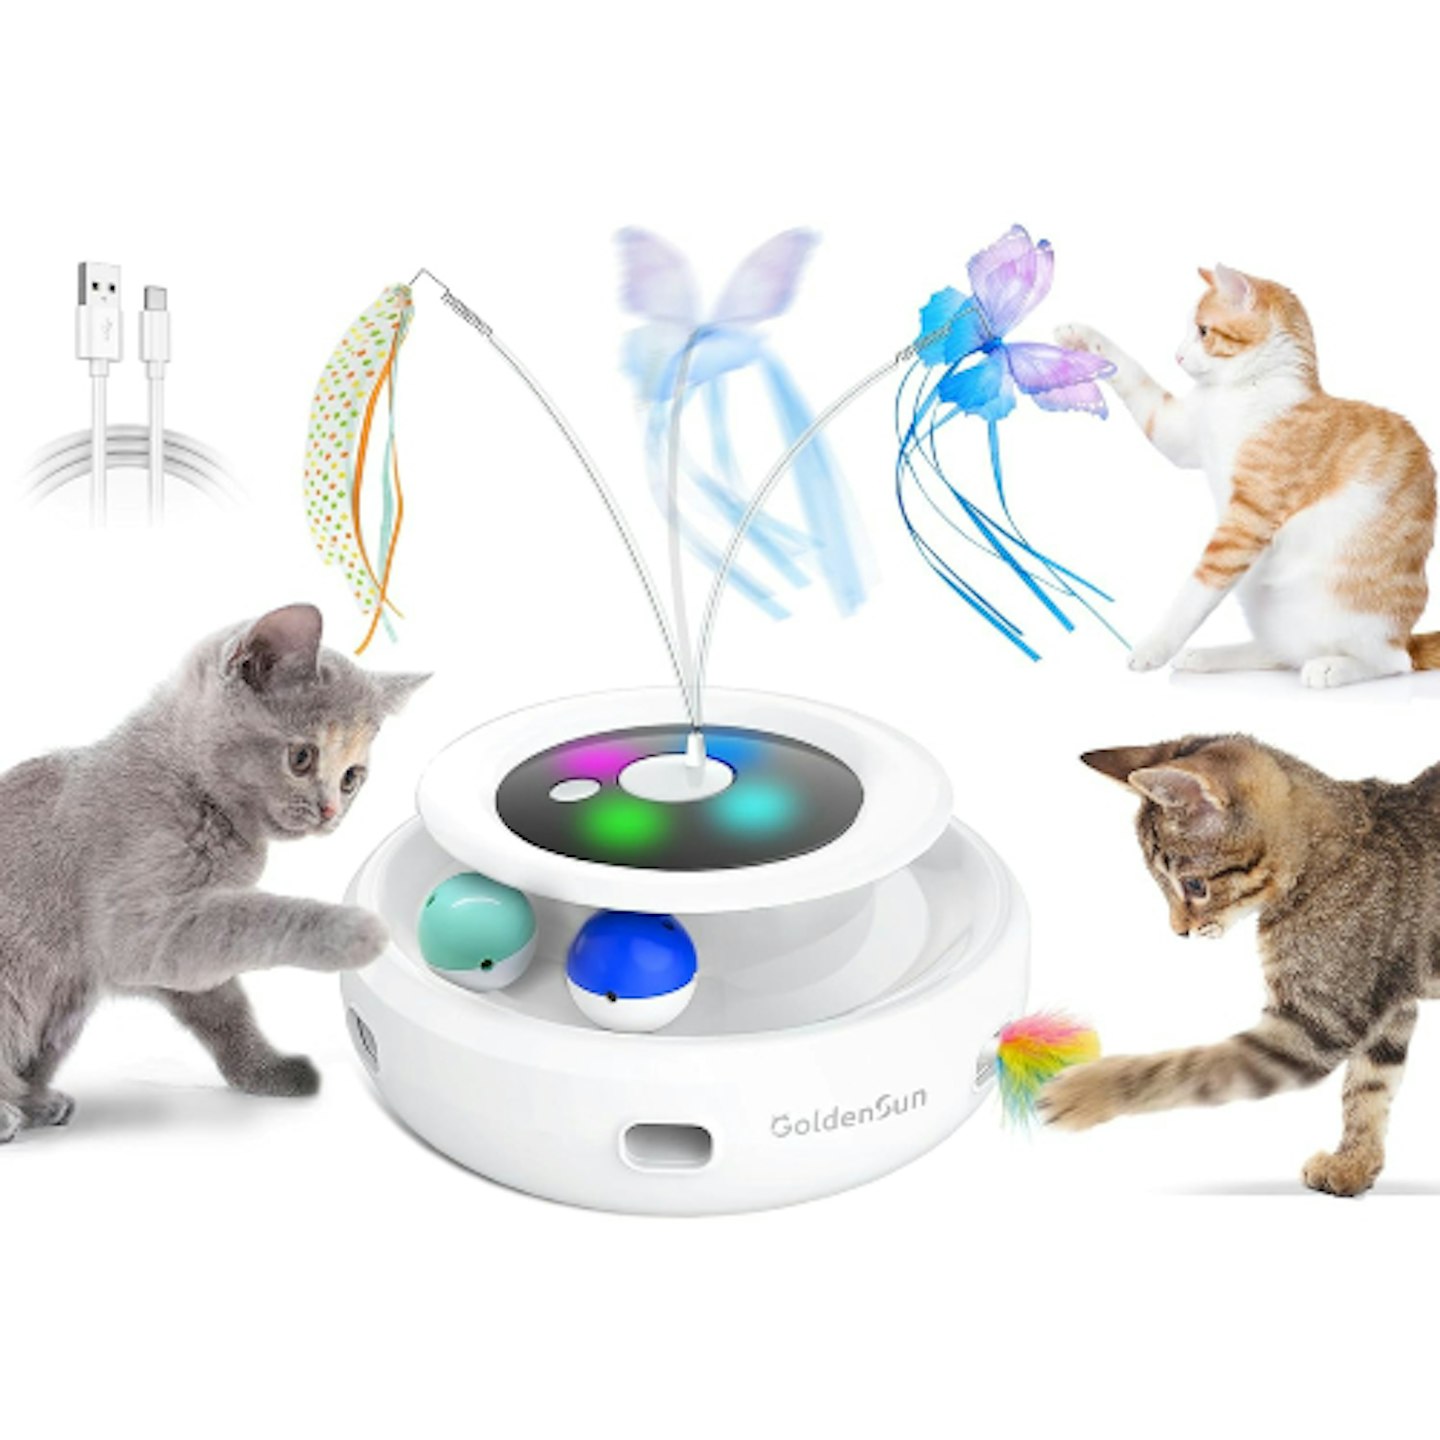 Interactive cat toy